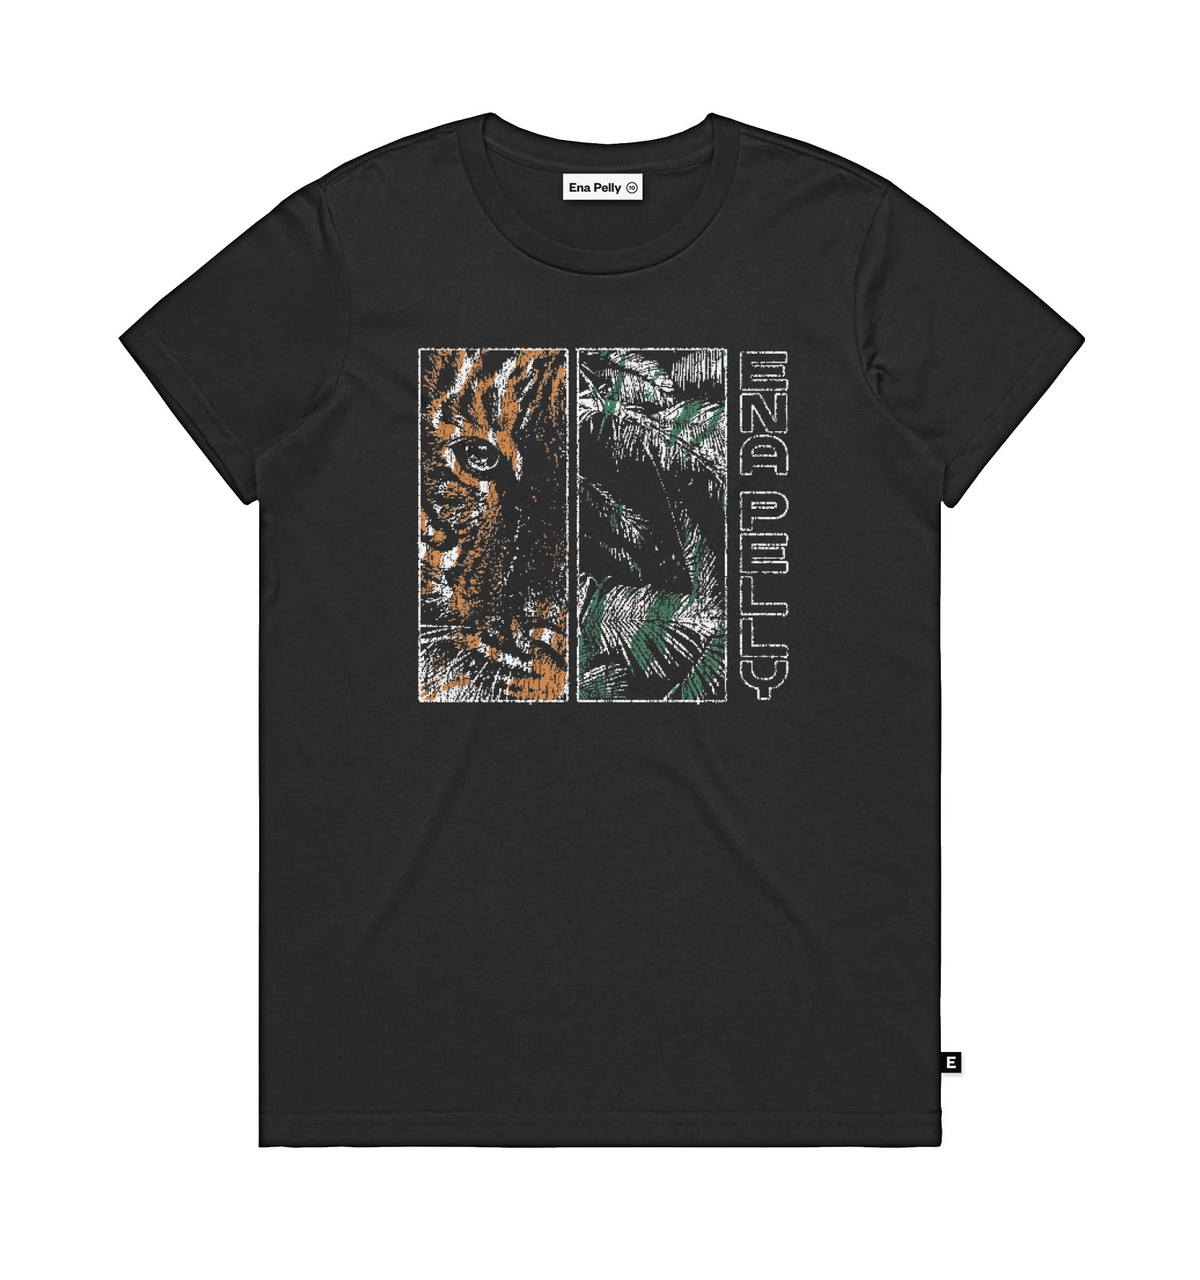 Ena Pelly - Lion T-Shirt Graphic | Atollon - a design company